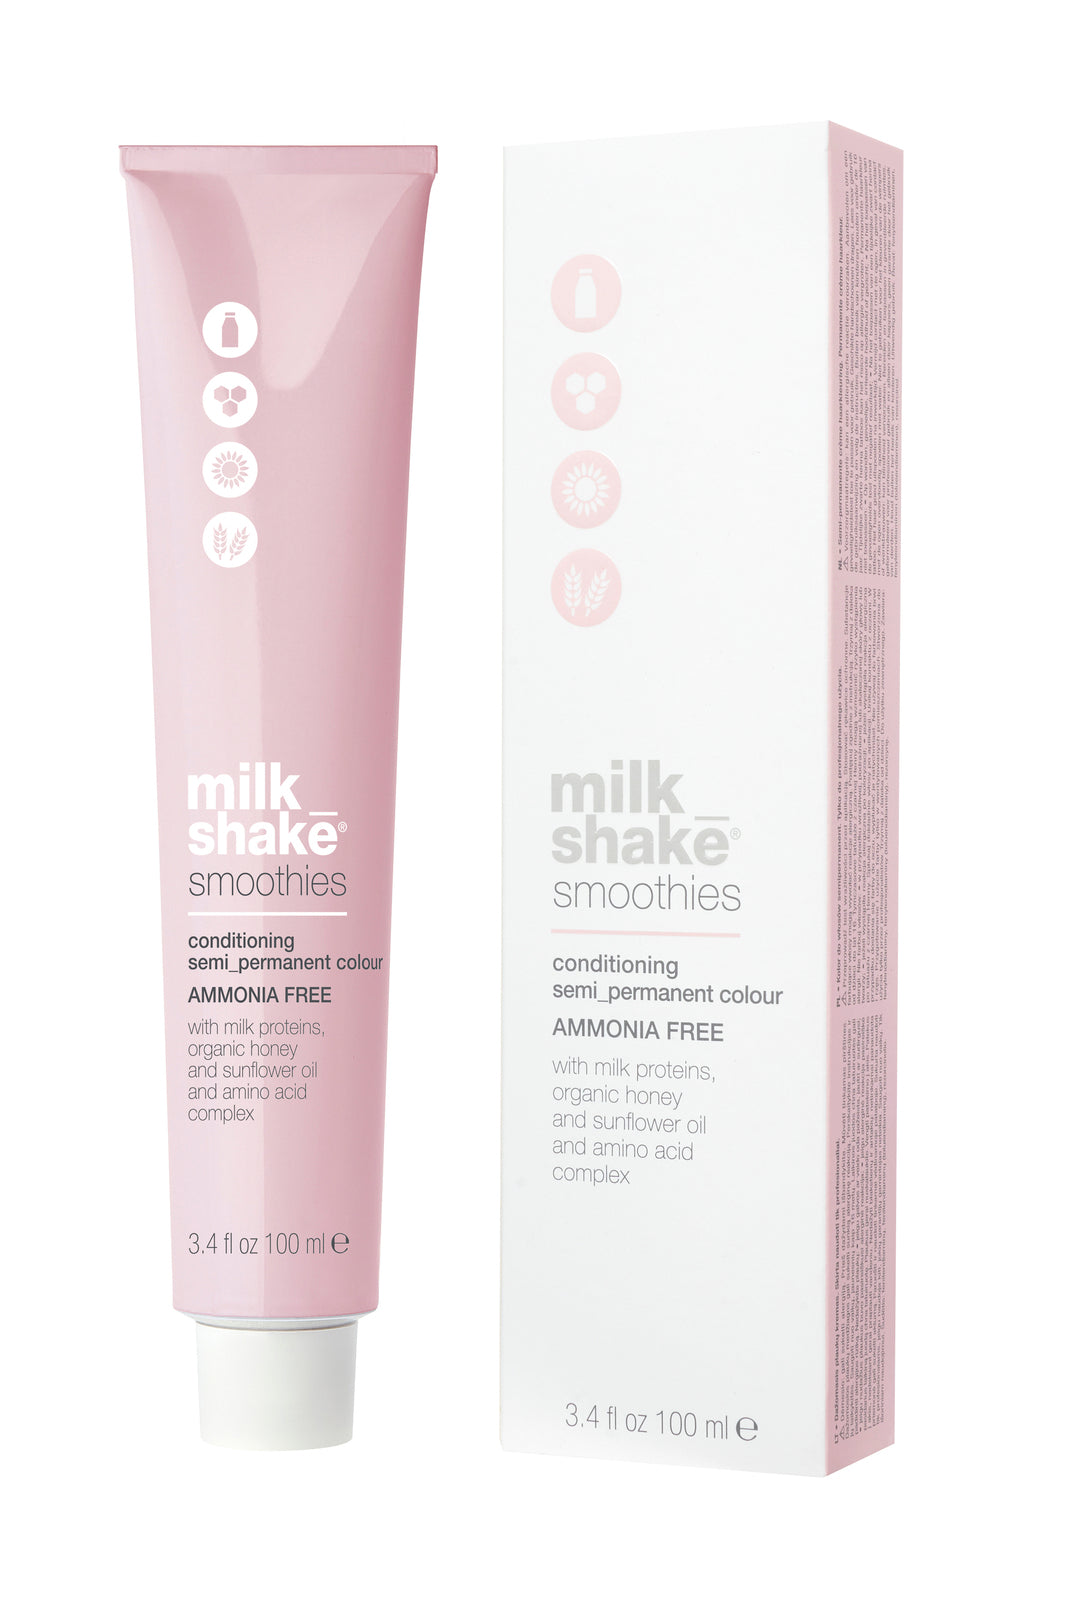 Milkshake smoothies semi-permanent color CACAO 6.15